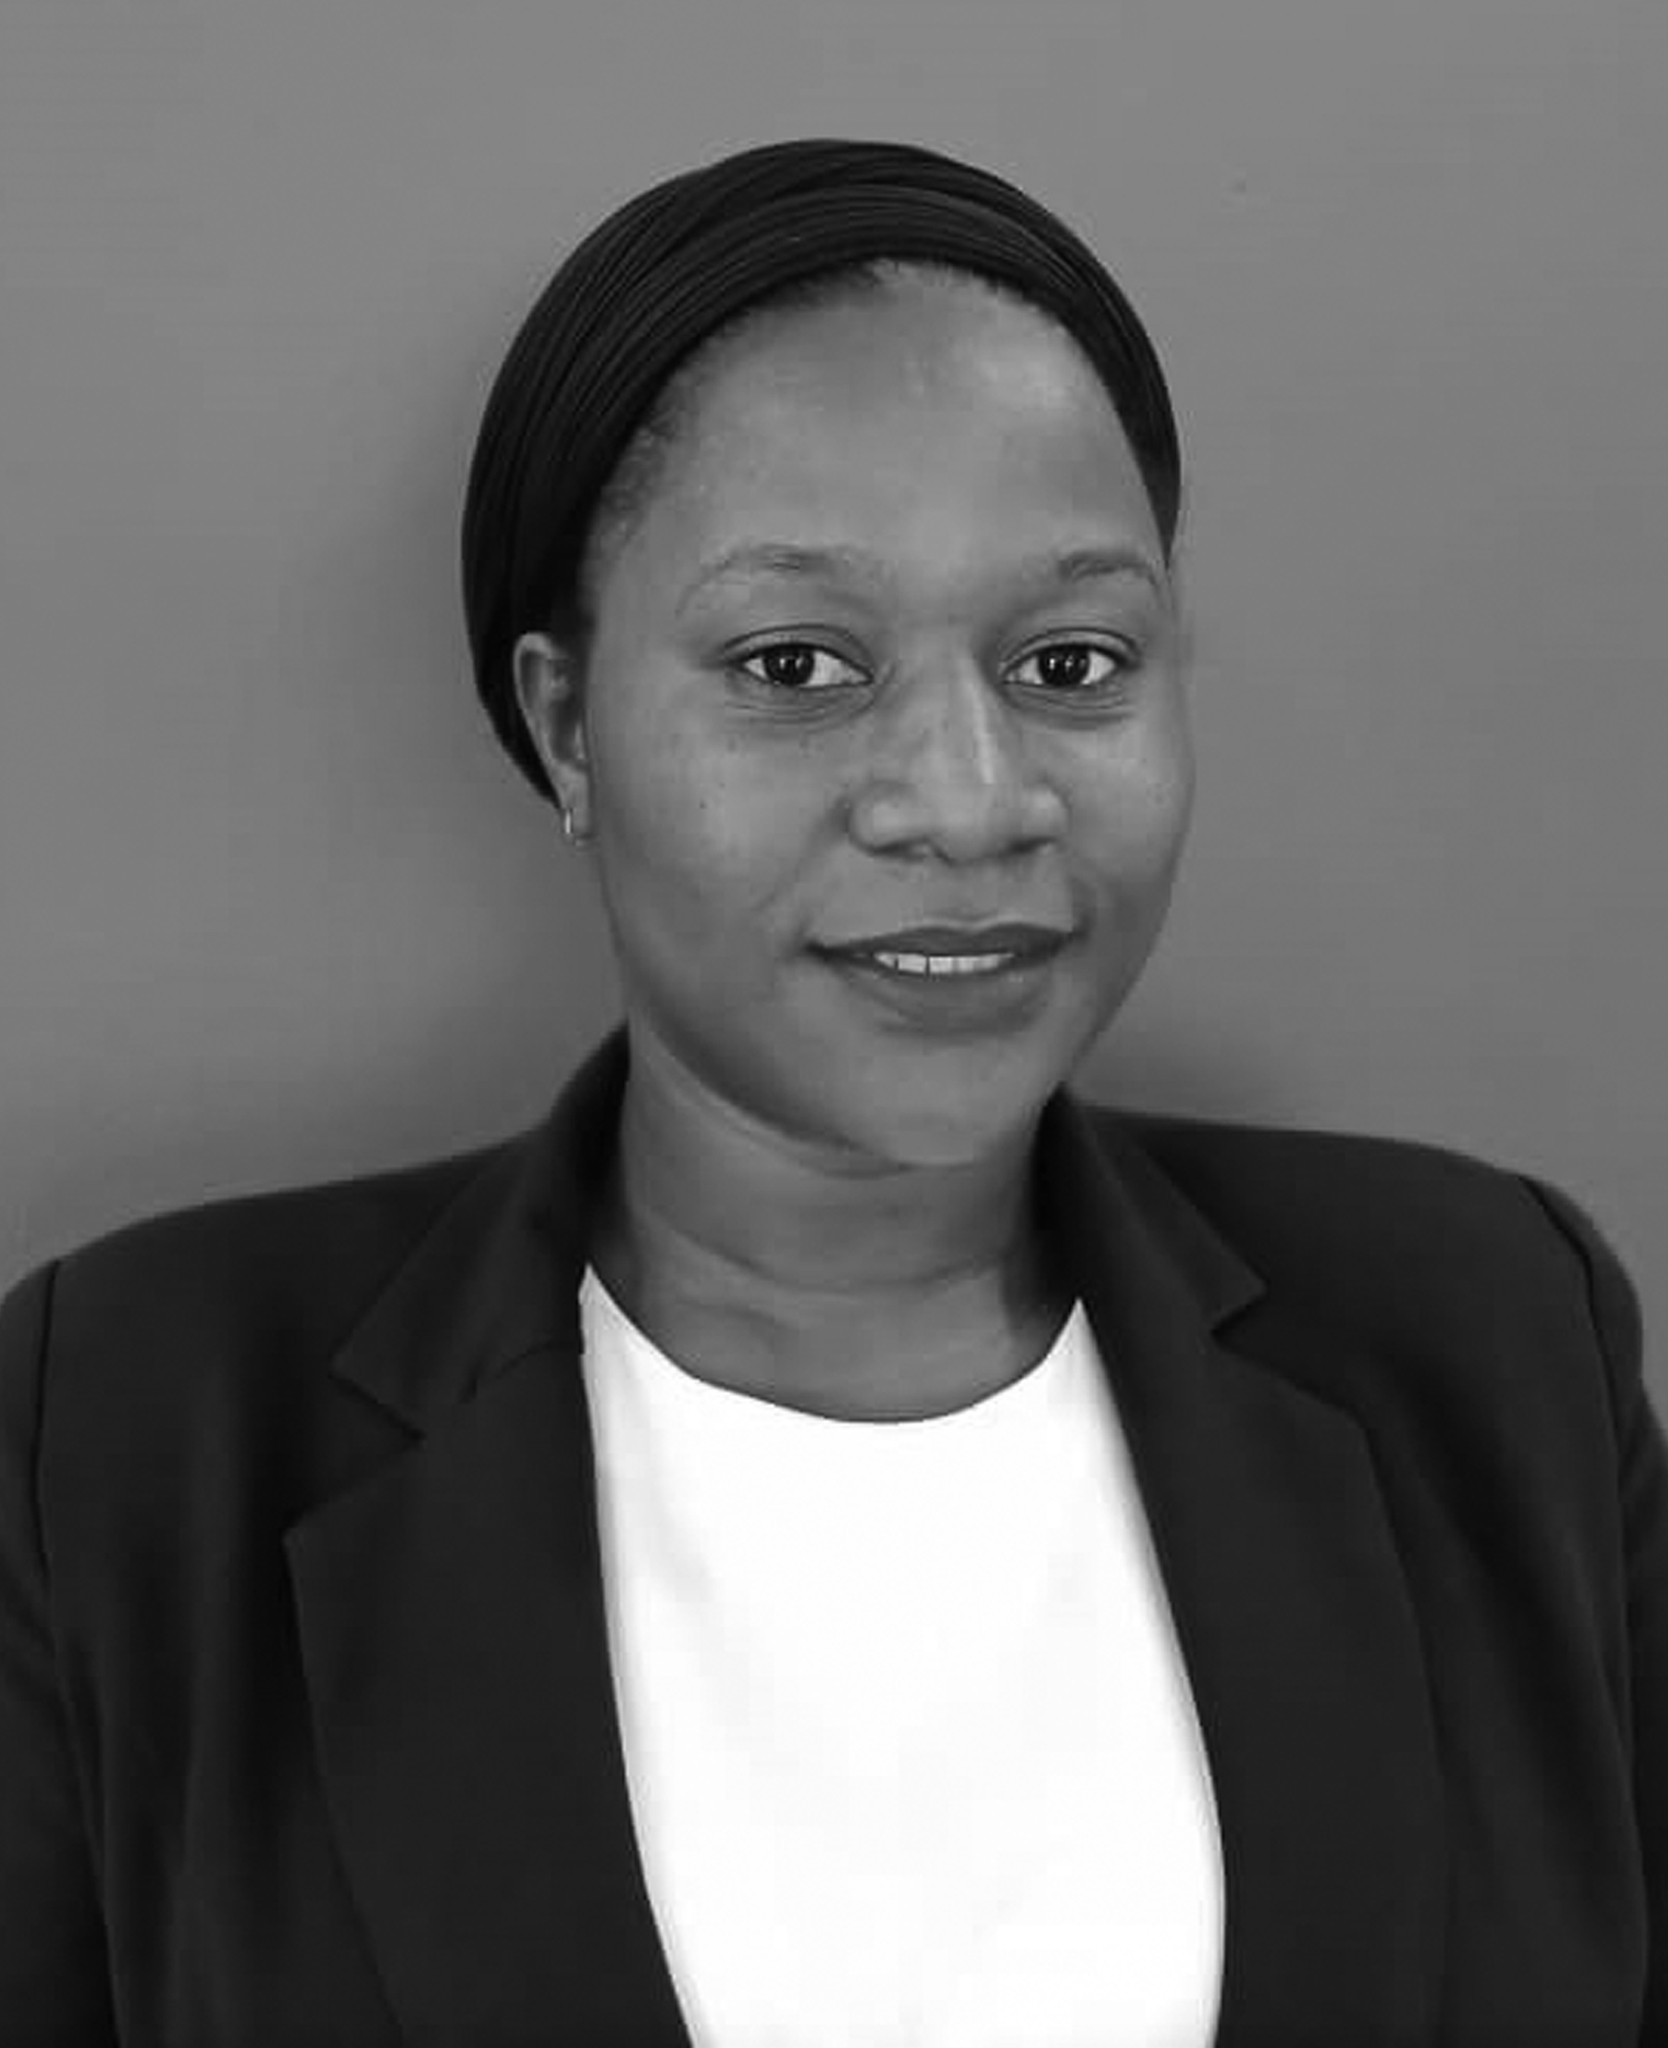 http://finandlaw.co.tz/wp-content/uploads/2020/09/Beatrice-Mutembei.jpg